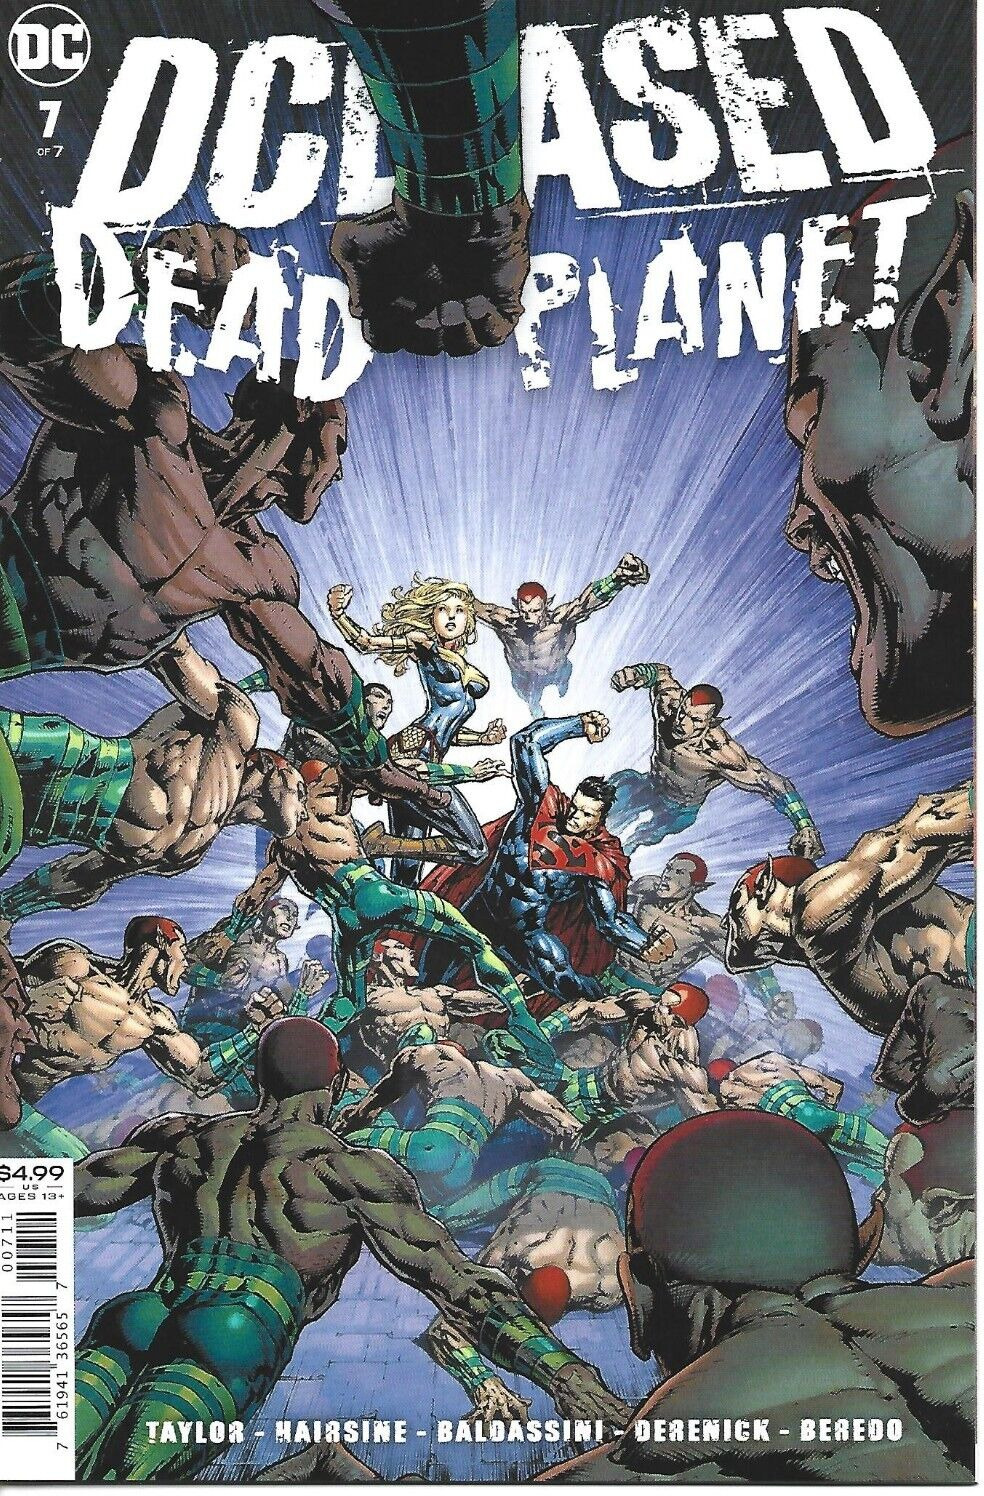 DCEASED DEAD PLANET #7 DAVID FINCH VARIANT DC COMICS 2021 NEW UNREAD BAG BOARD